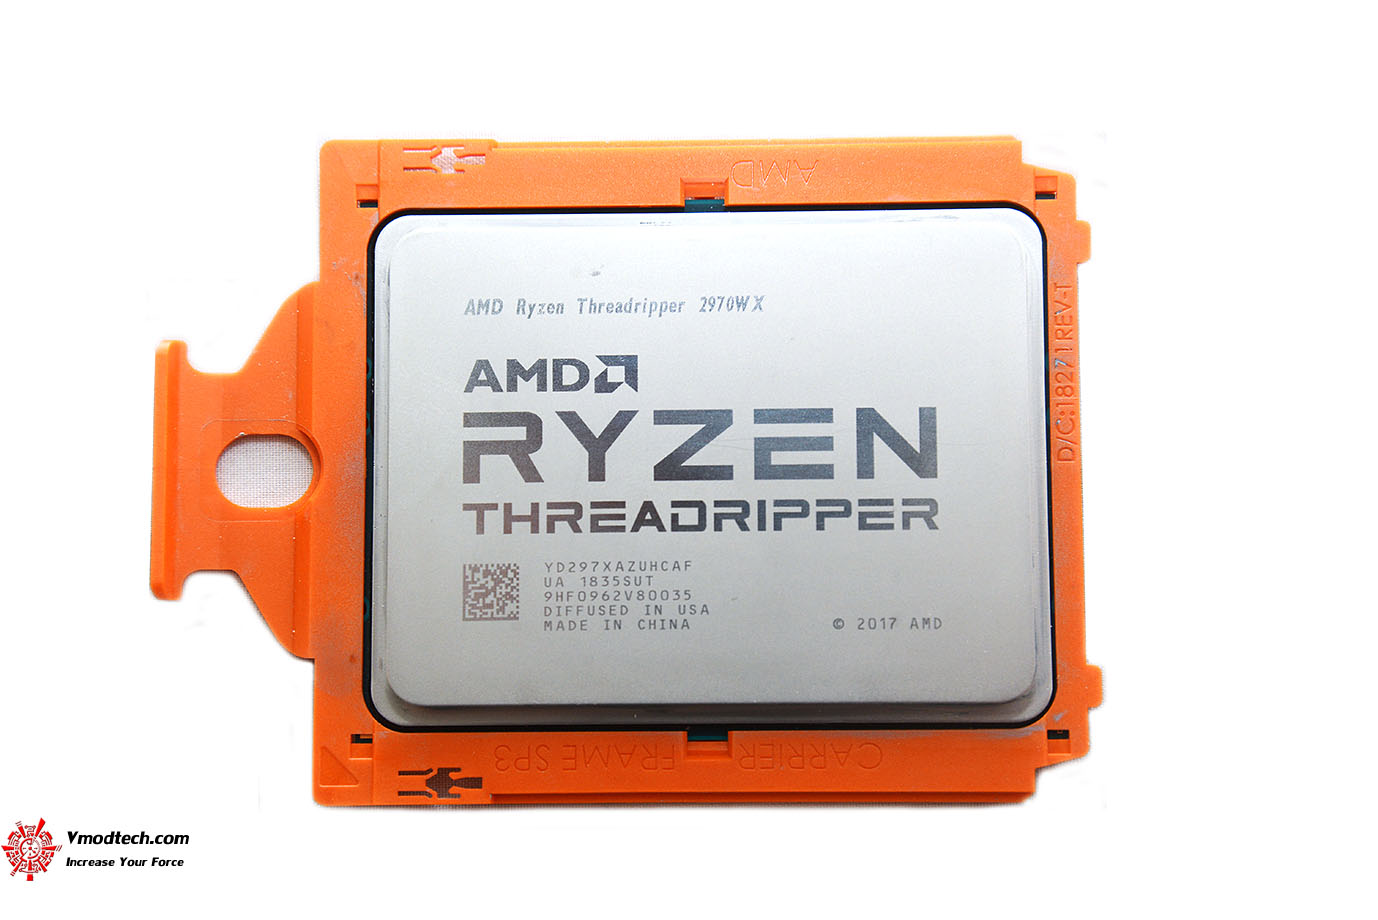 dsc 0202 AMD RYZEN THREADRIPPER 2970WX PROCESSOR REVIEW